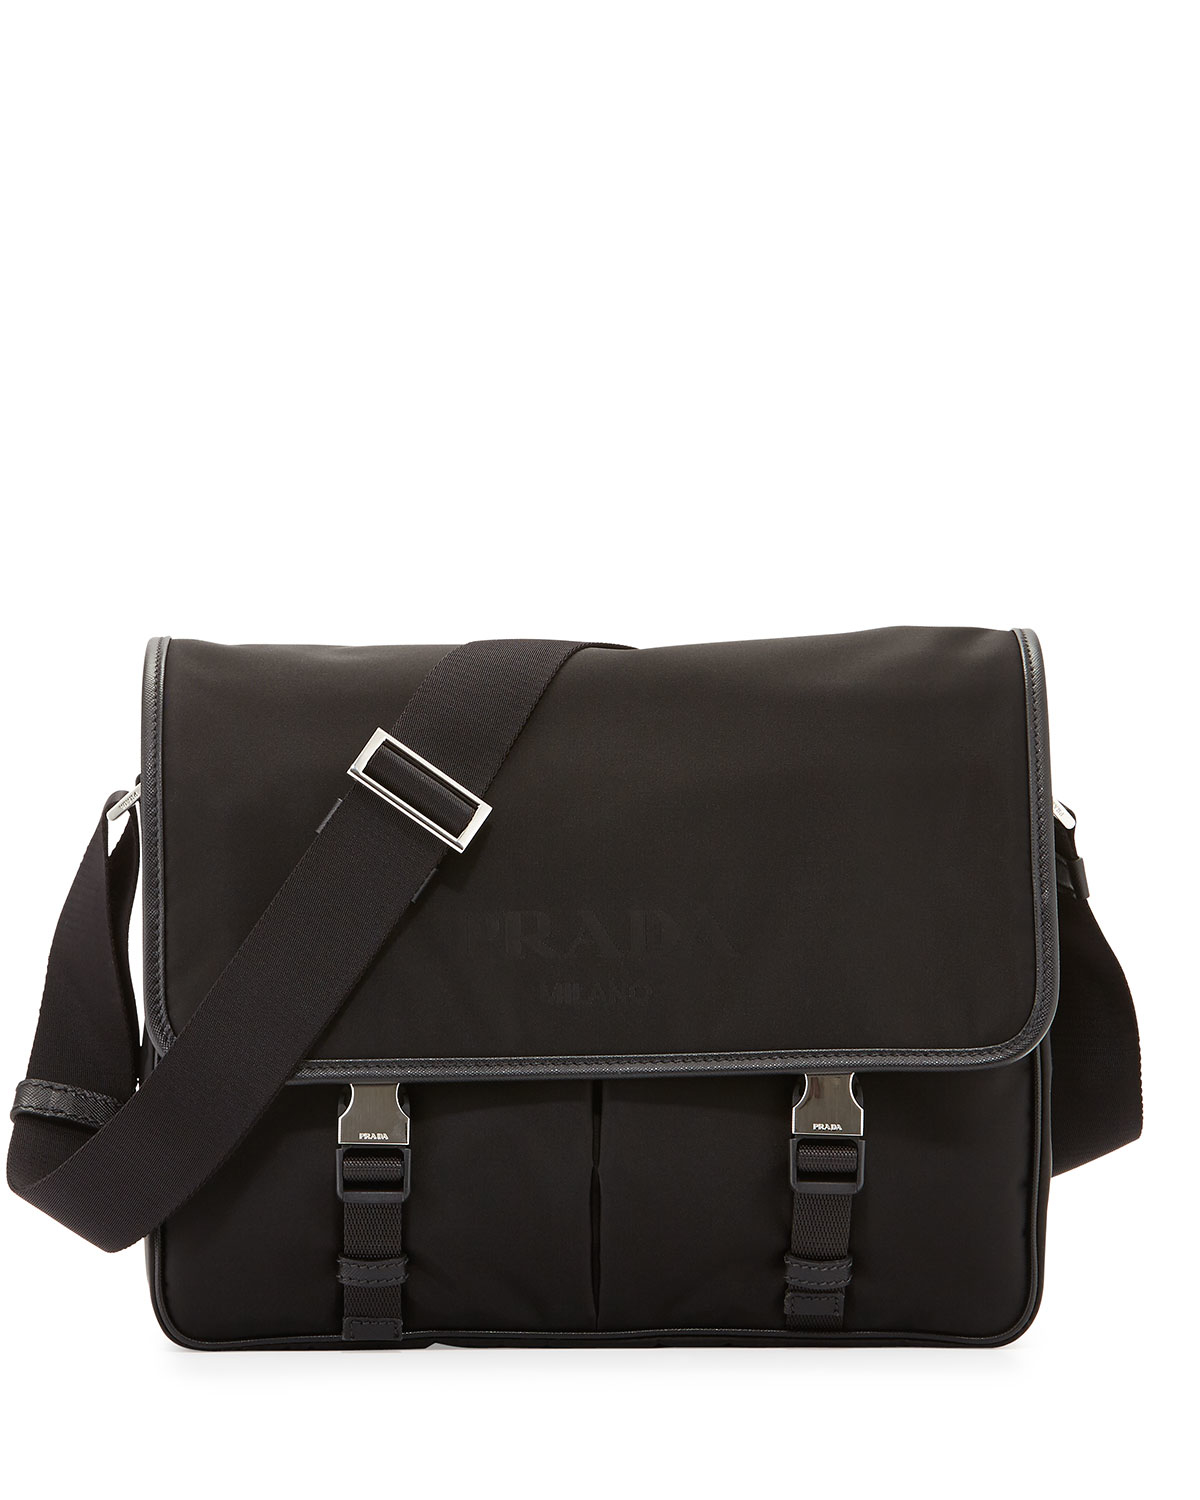 prada messenger bag black nylon, prada replica backpack